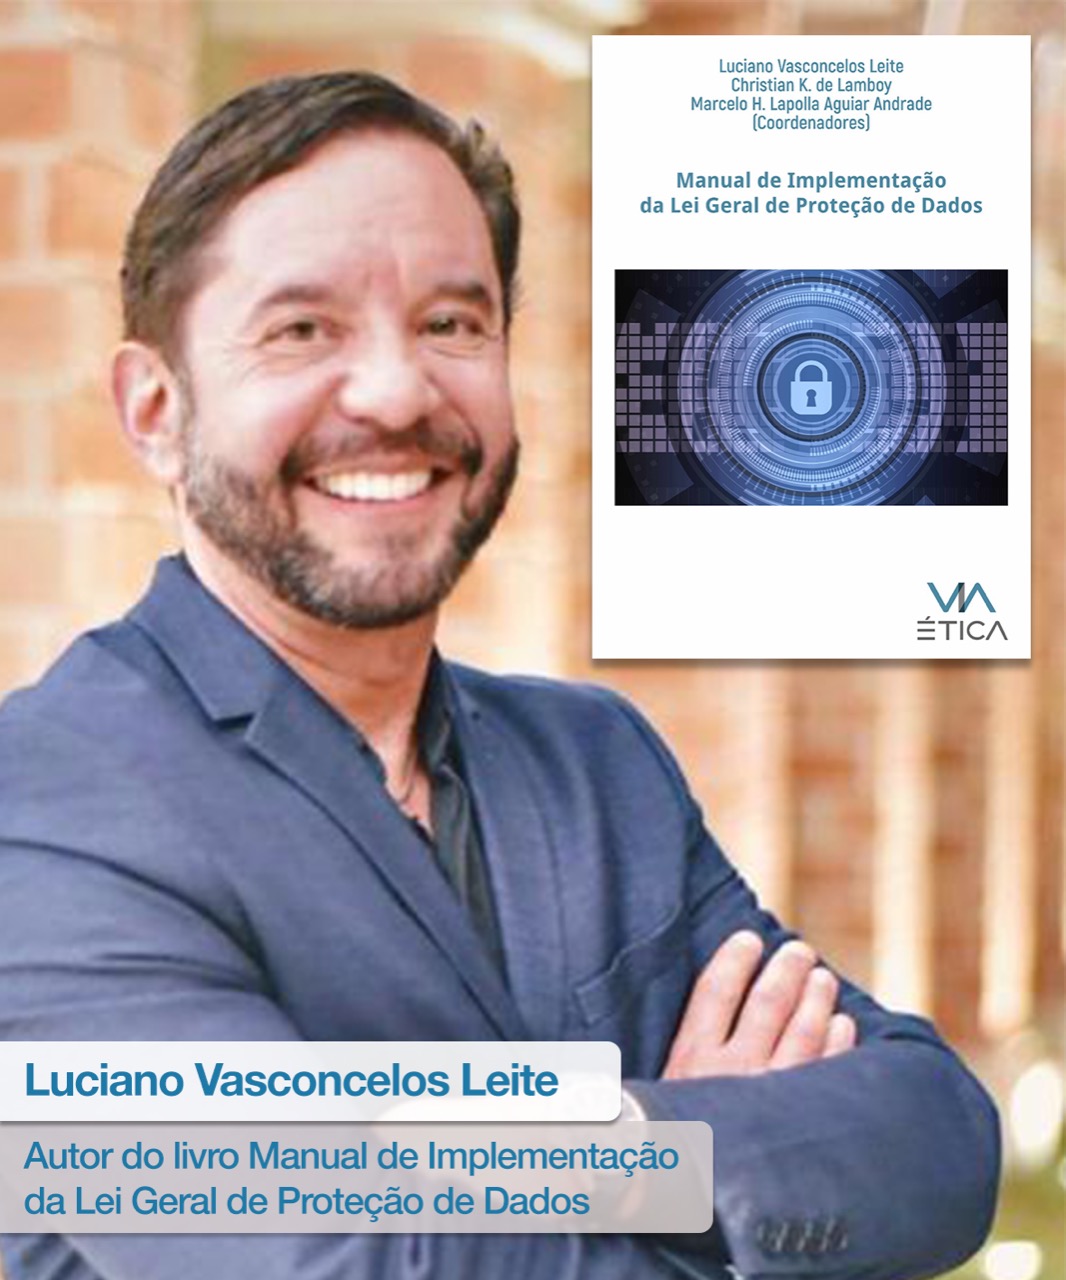 Luciano Vasconcelos Leite